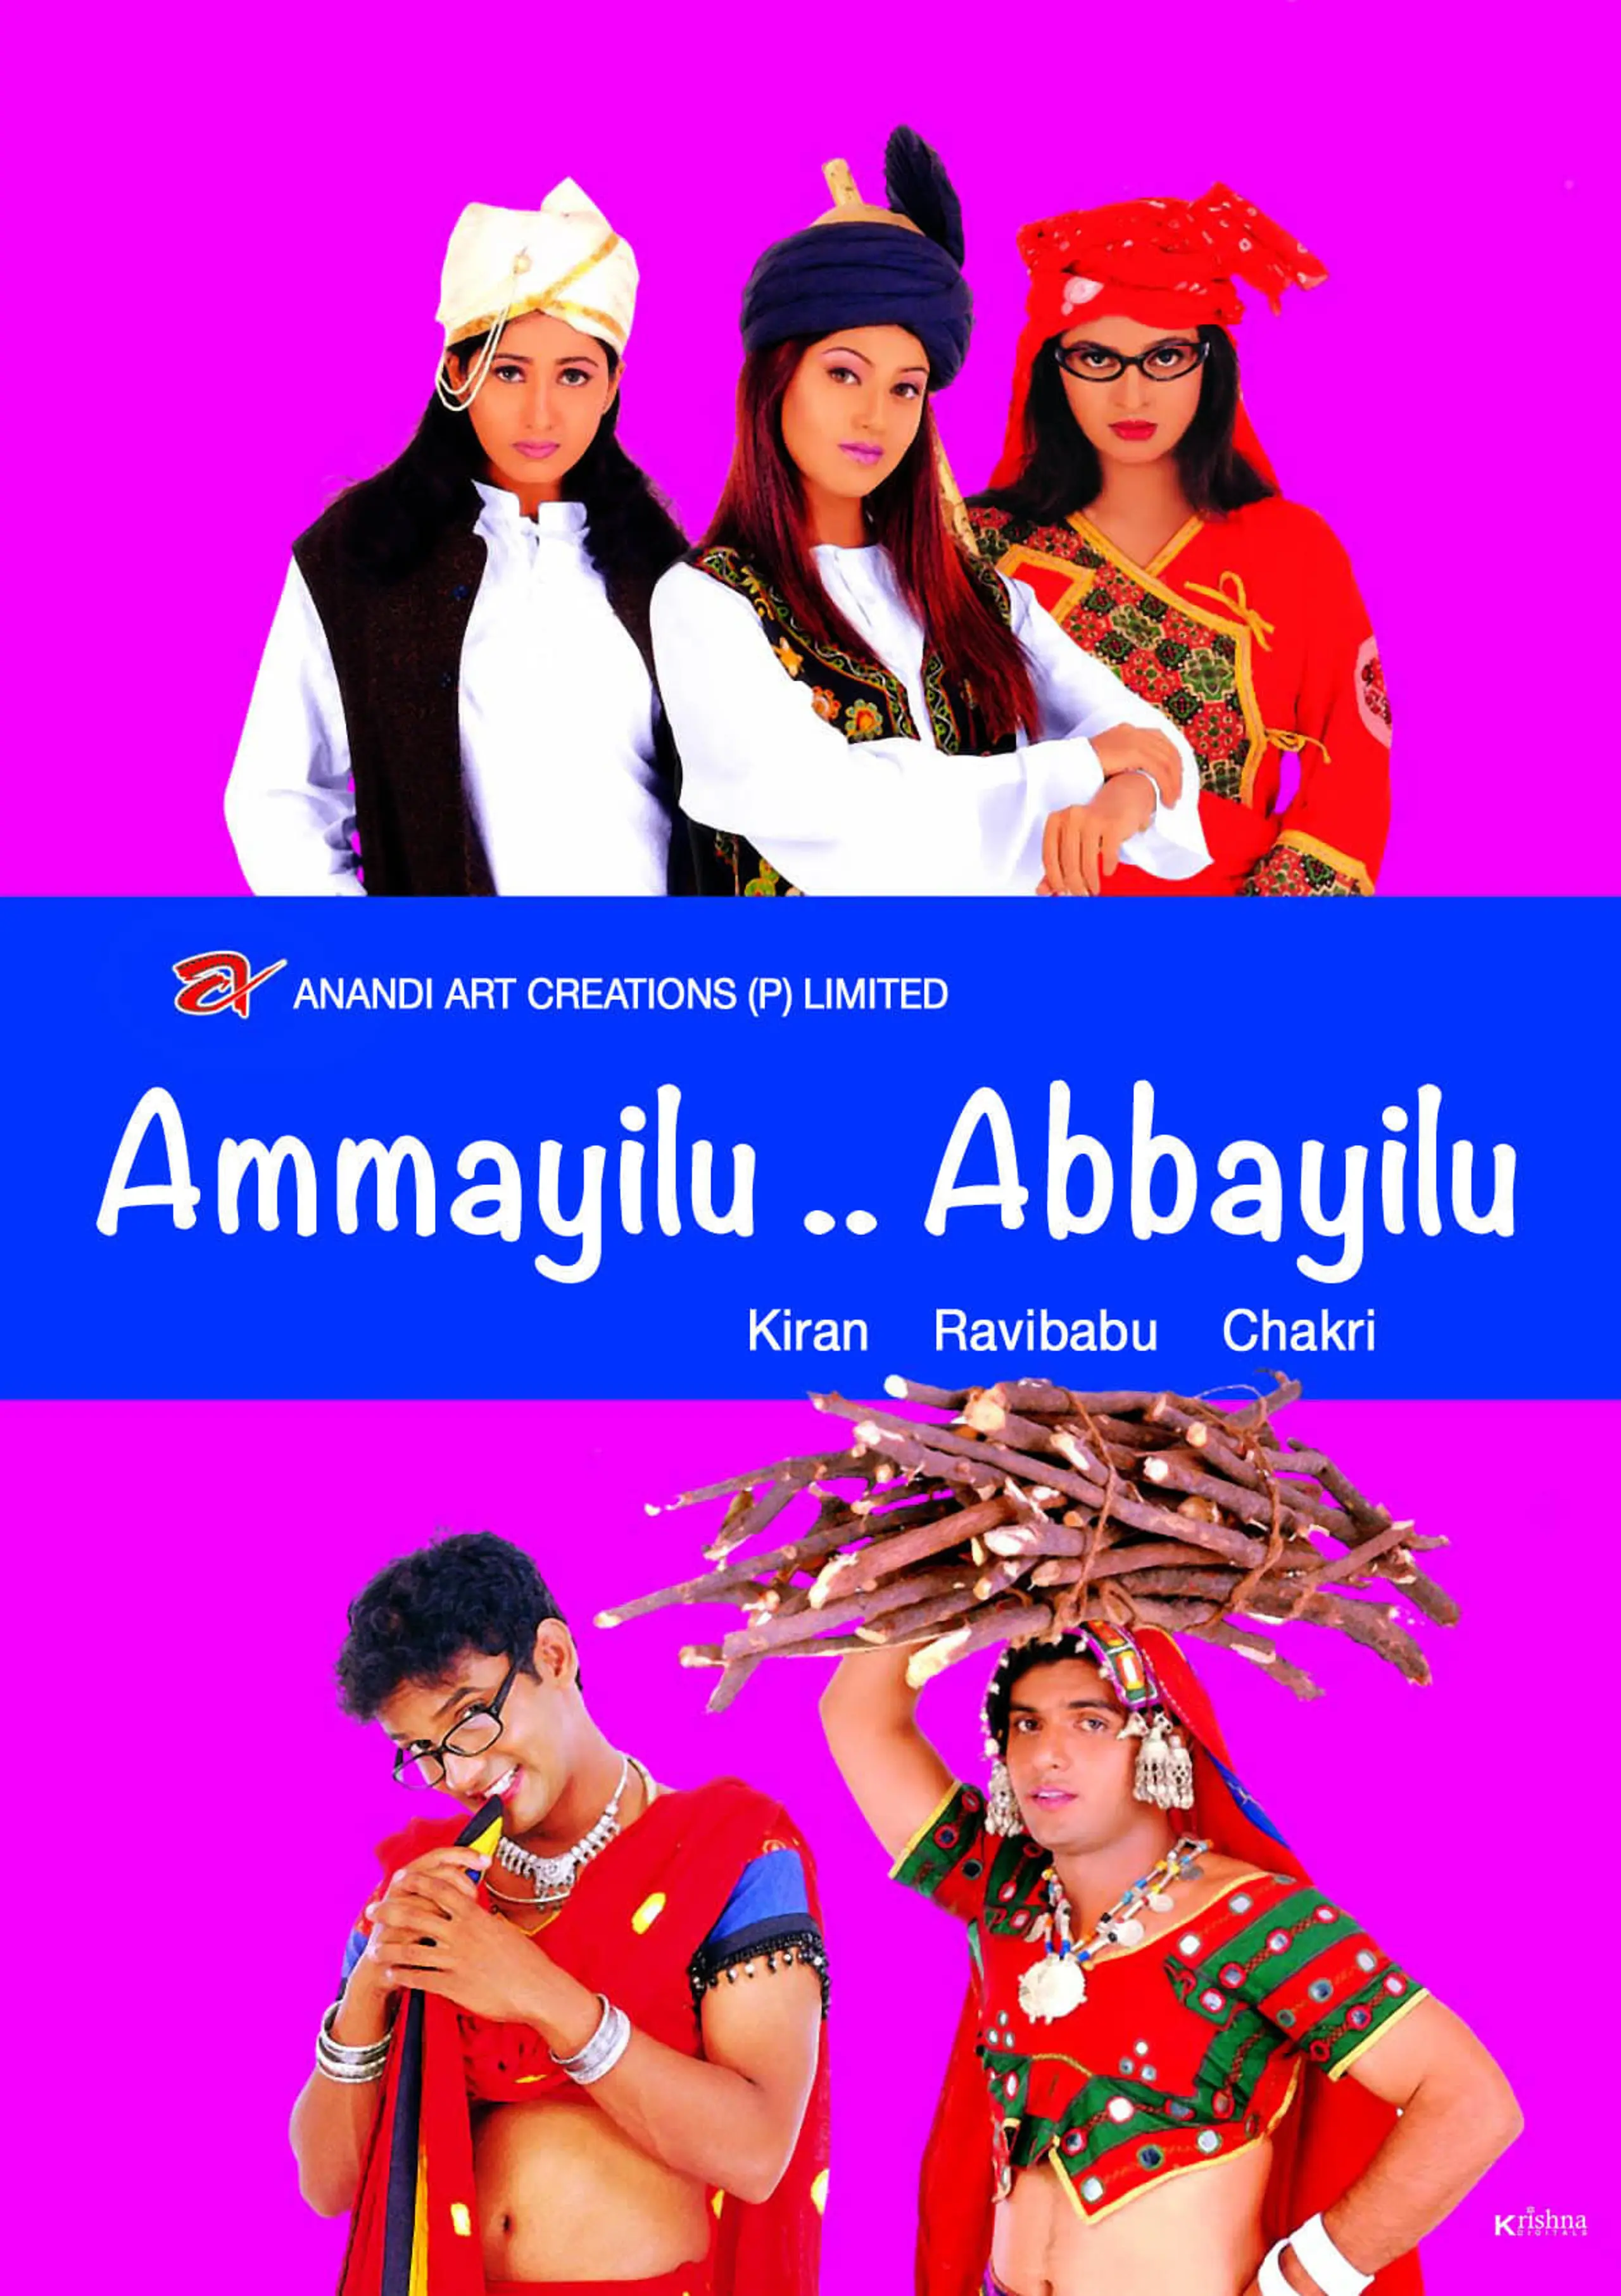 Ammailu Abbailu